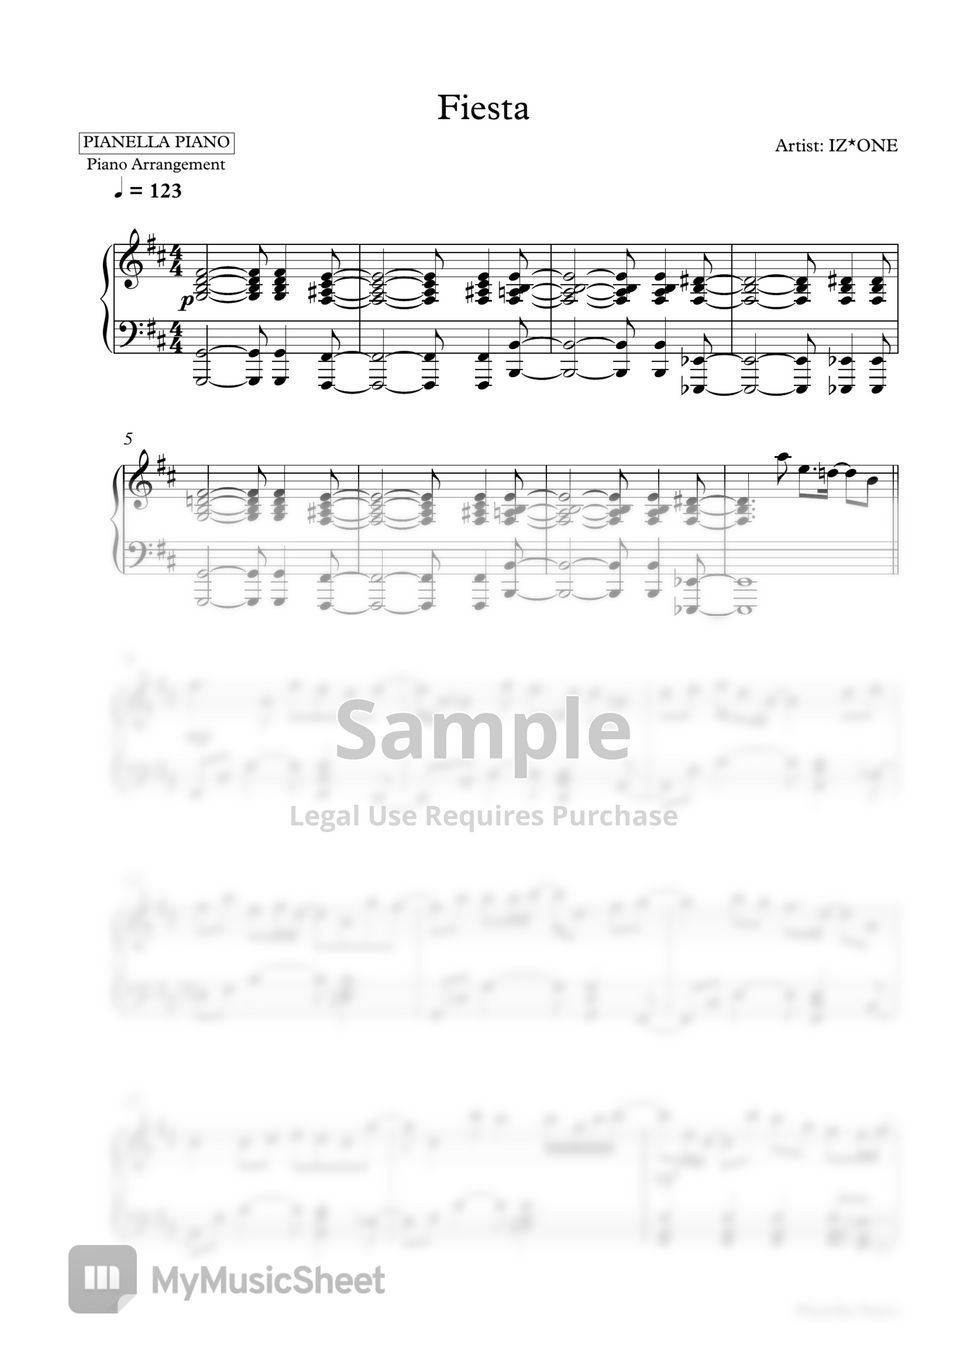 IZ*ONE - Fiesta (Piano Sheet) by Pianella Piano